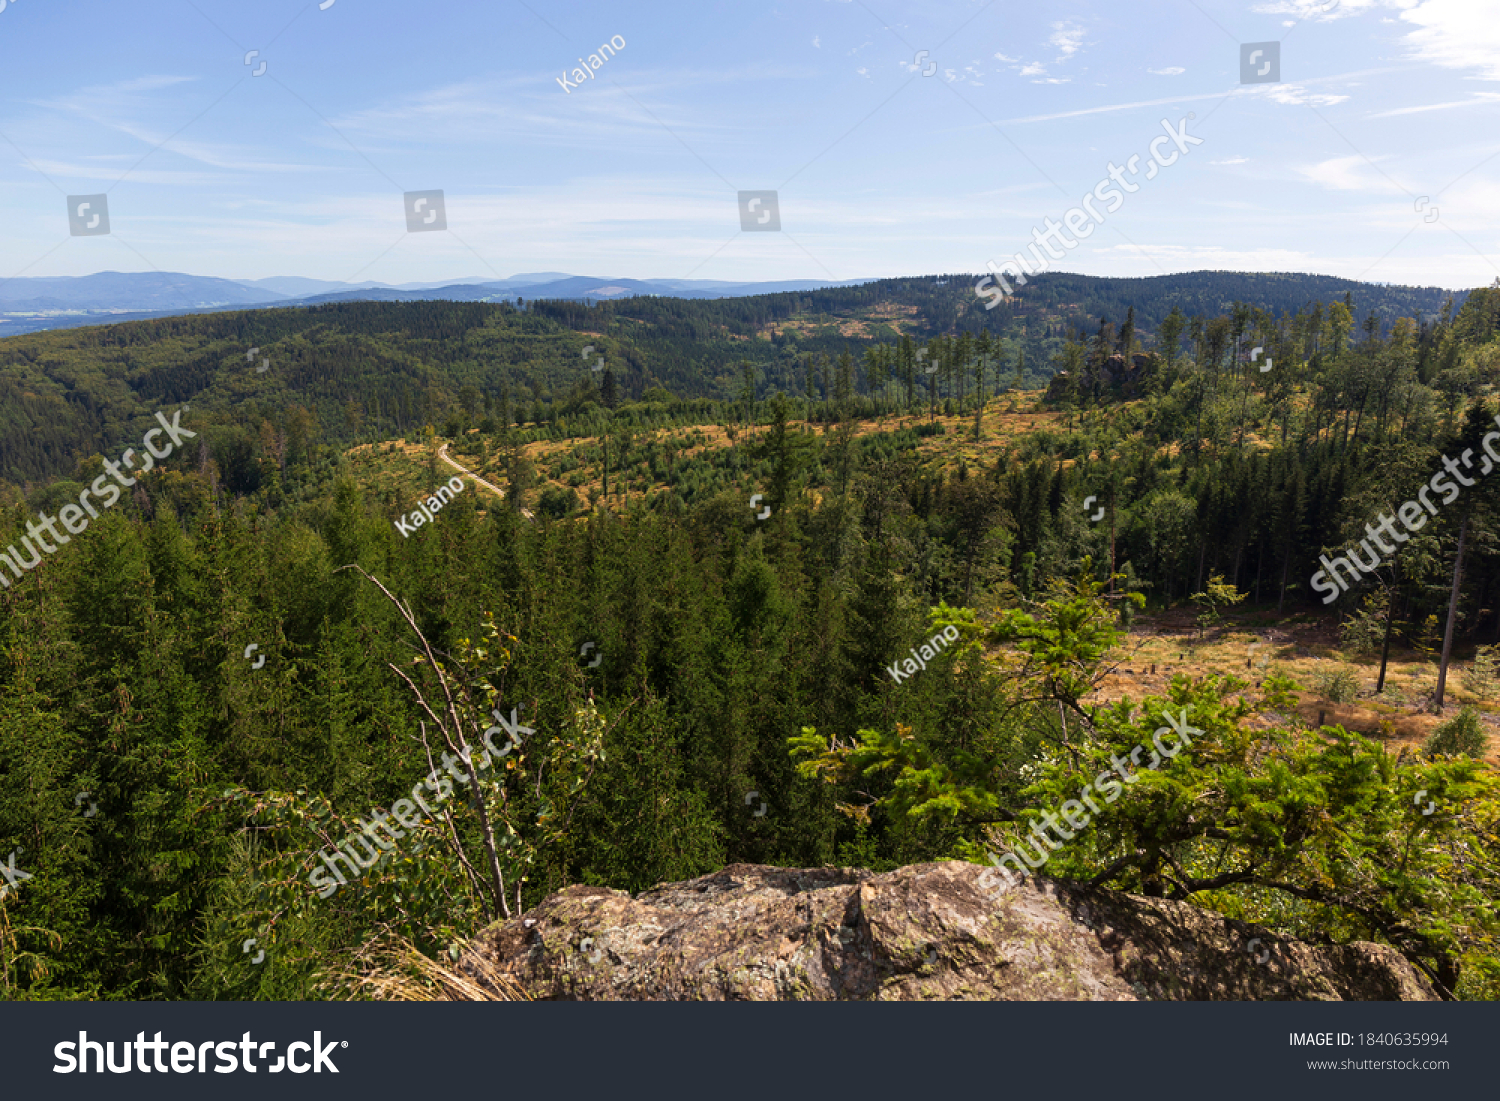 Landscape from the Hill High Rock, Vysoky Kamen, in Rychlebske Mountains, Czech Republic #1840635994